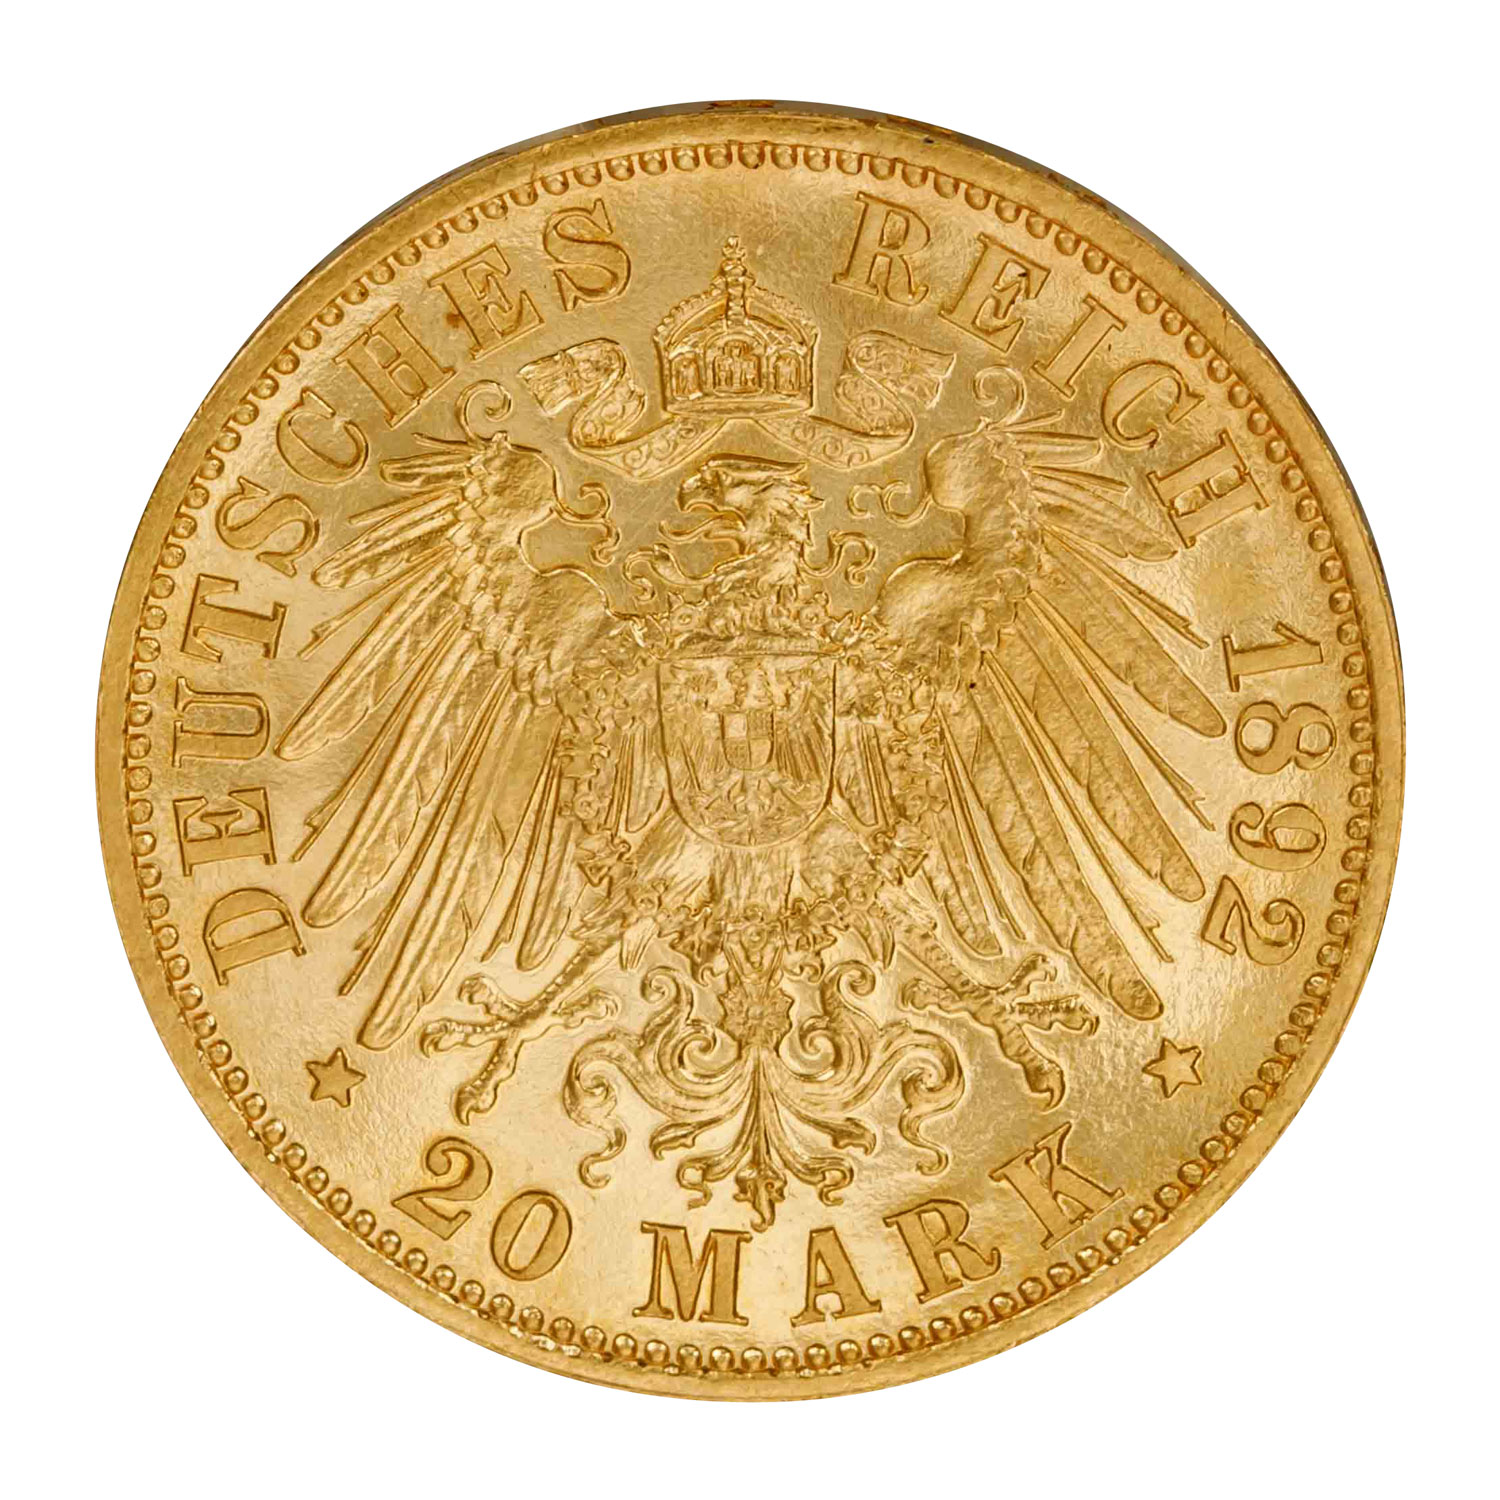 Großherzogtum Hessen/Gold - 20 Mark 1892/A, Großherzog Ludwig IV., - Image 2 of 3